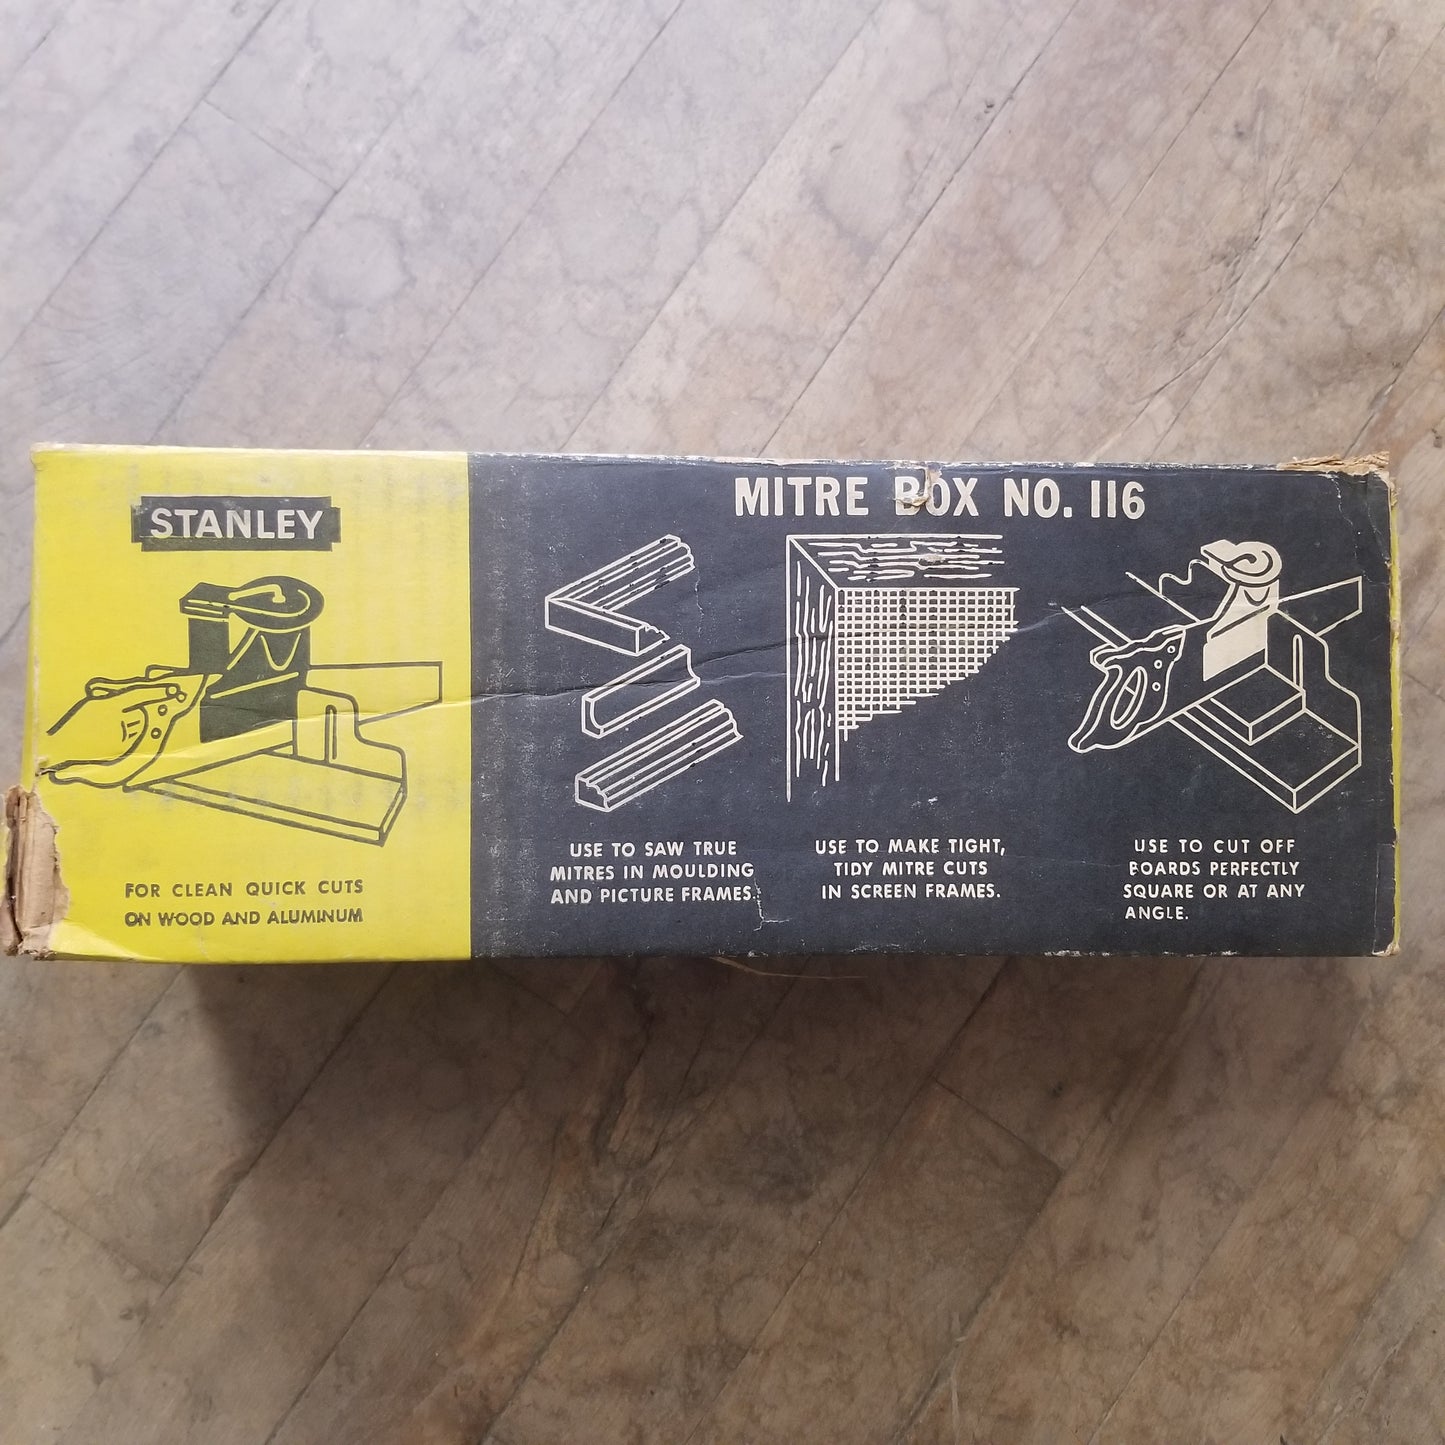 Stanley Mitre Box No. 116 (116S)